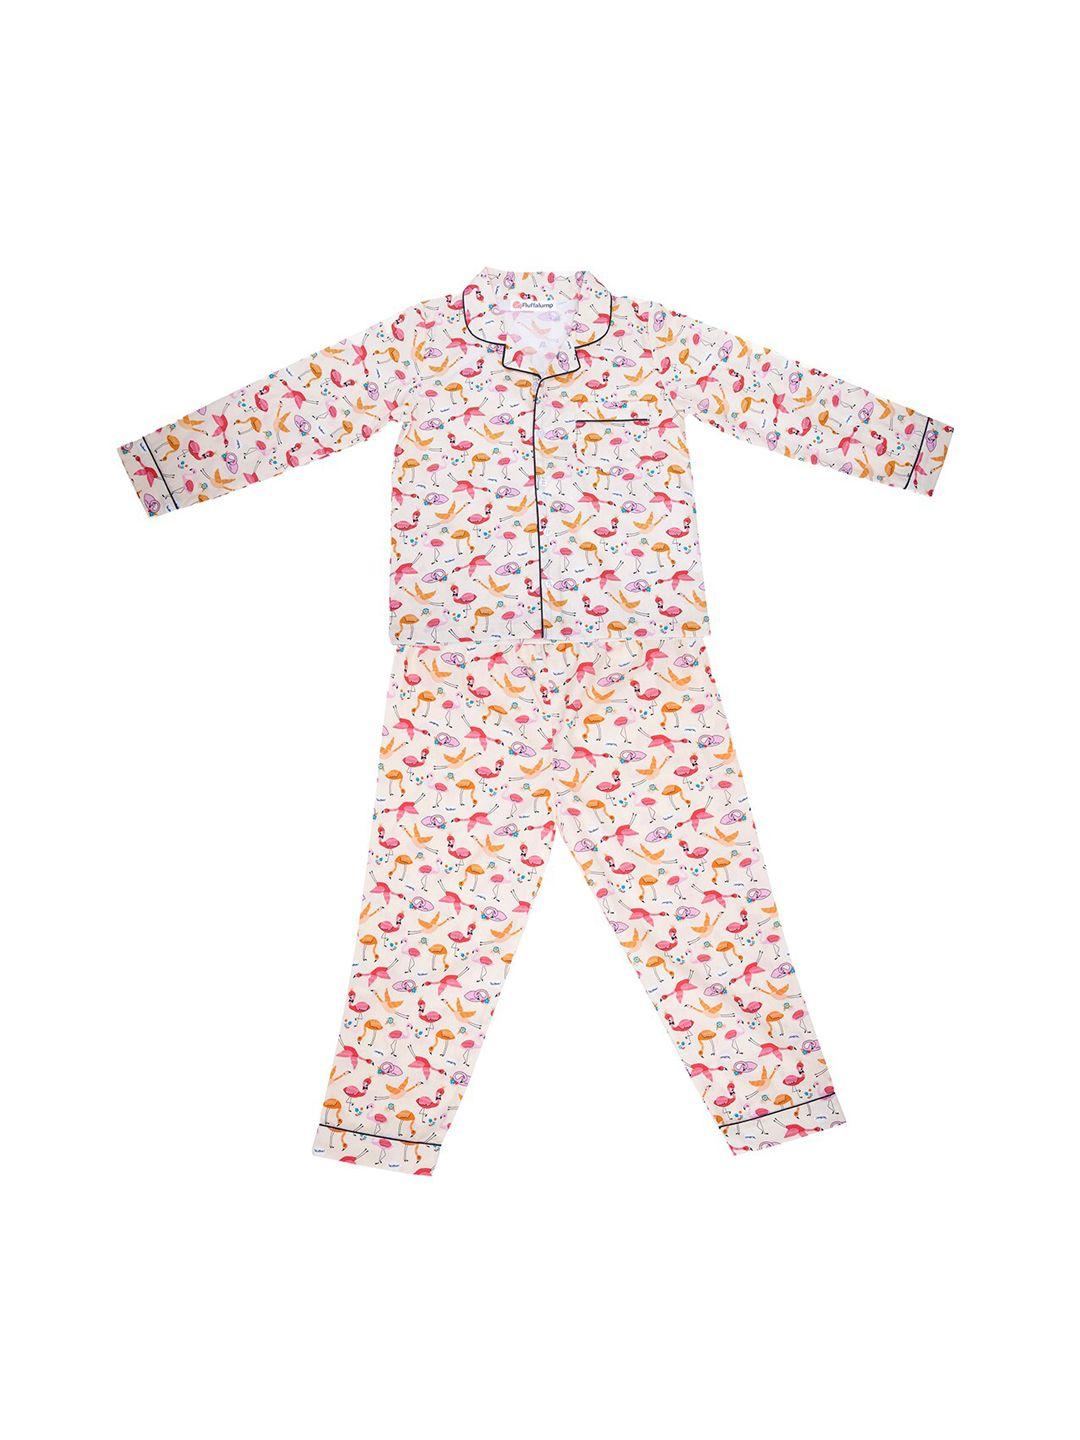 fluffalump kids conversational printed pure cotton night suit